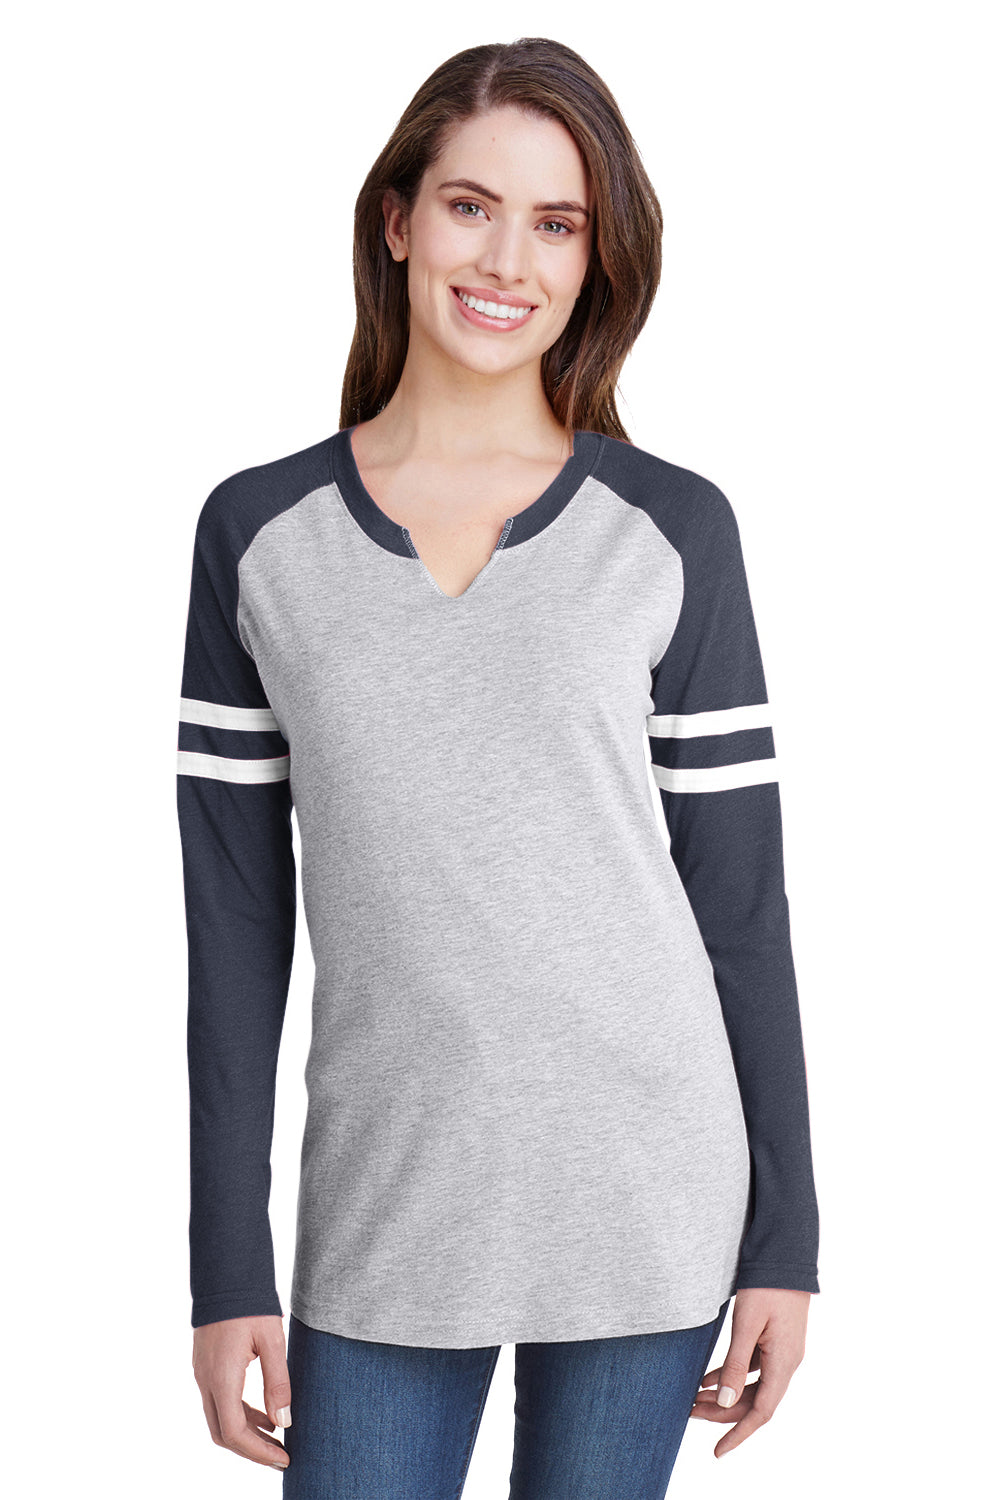 LAT 3534 Womens Gameday Mash Up Fine Jersey Long Sleeve V-Neck T-Shirt Heather Grey/Navy Blue Front